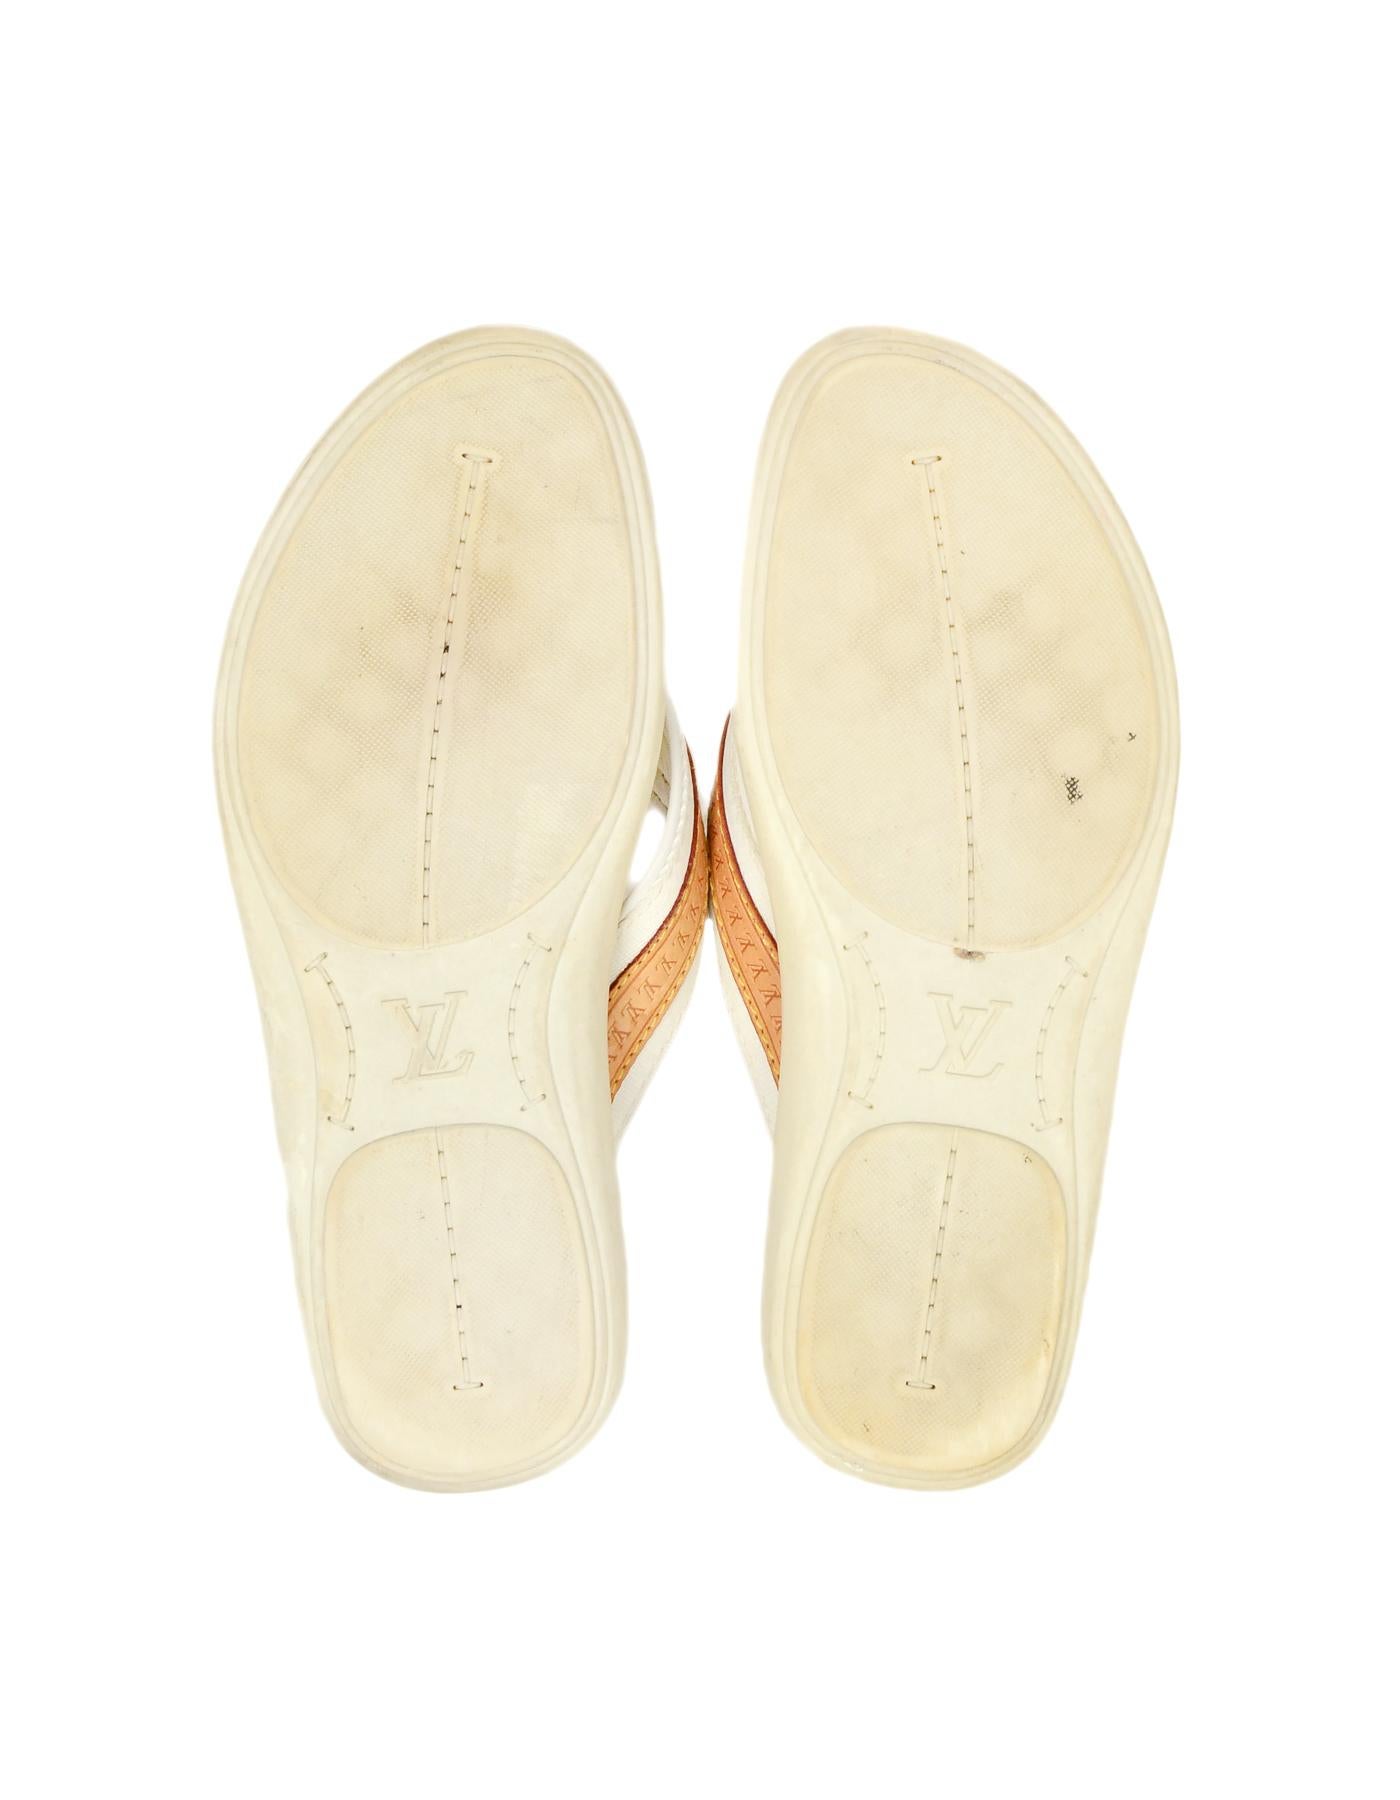 Louis Vuitton White Canvas/Leather Logo Thong Sandals Sz 38 4